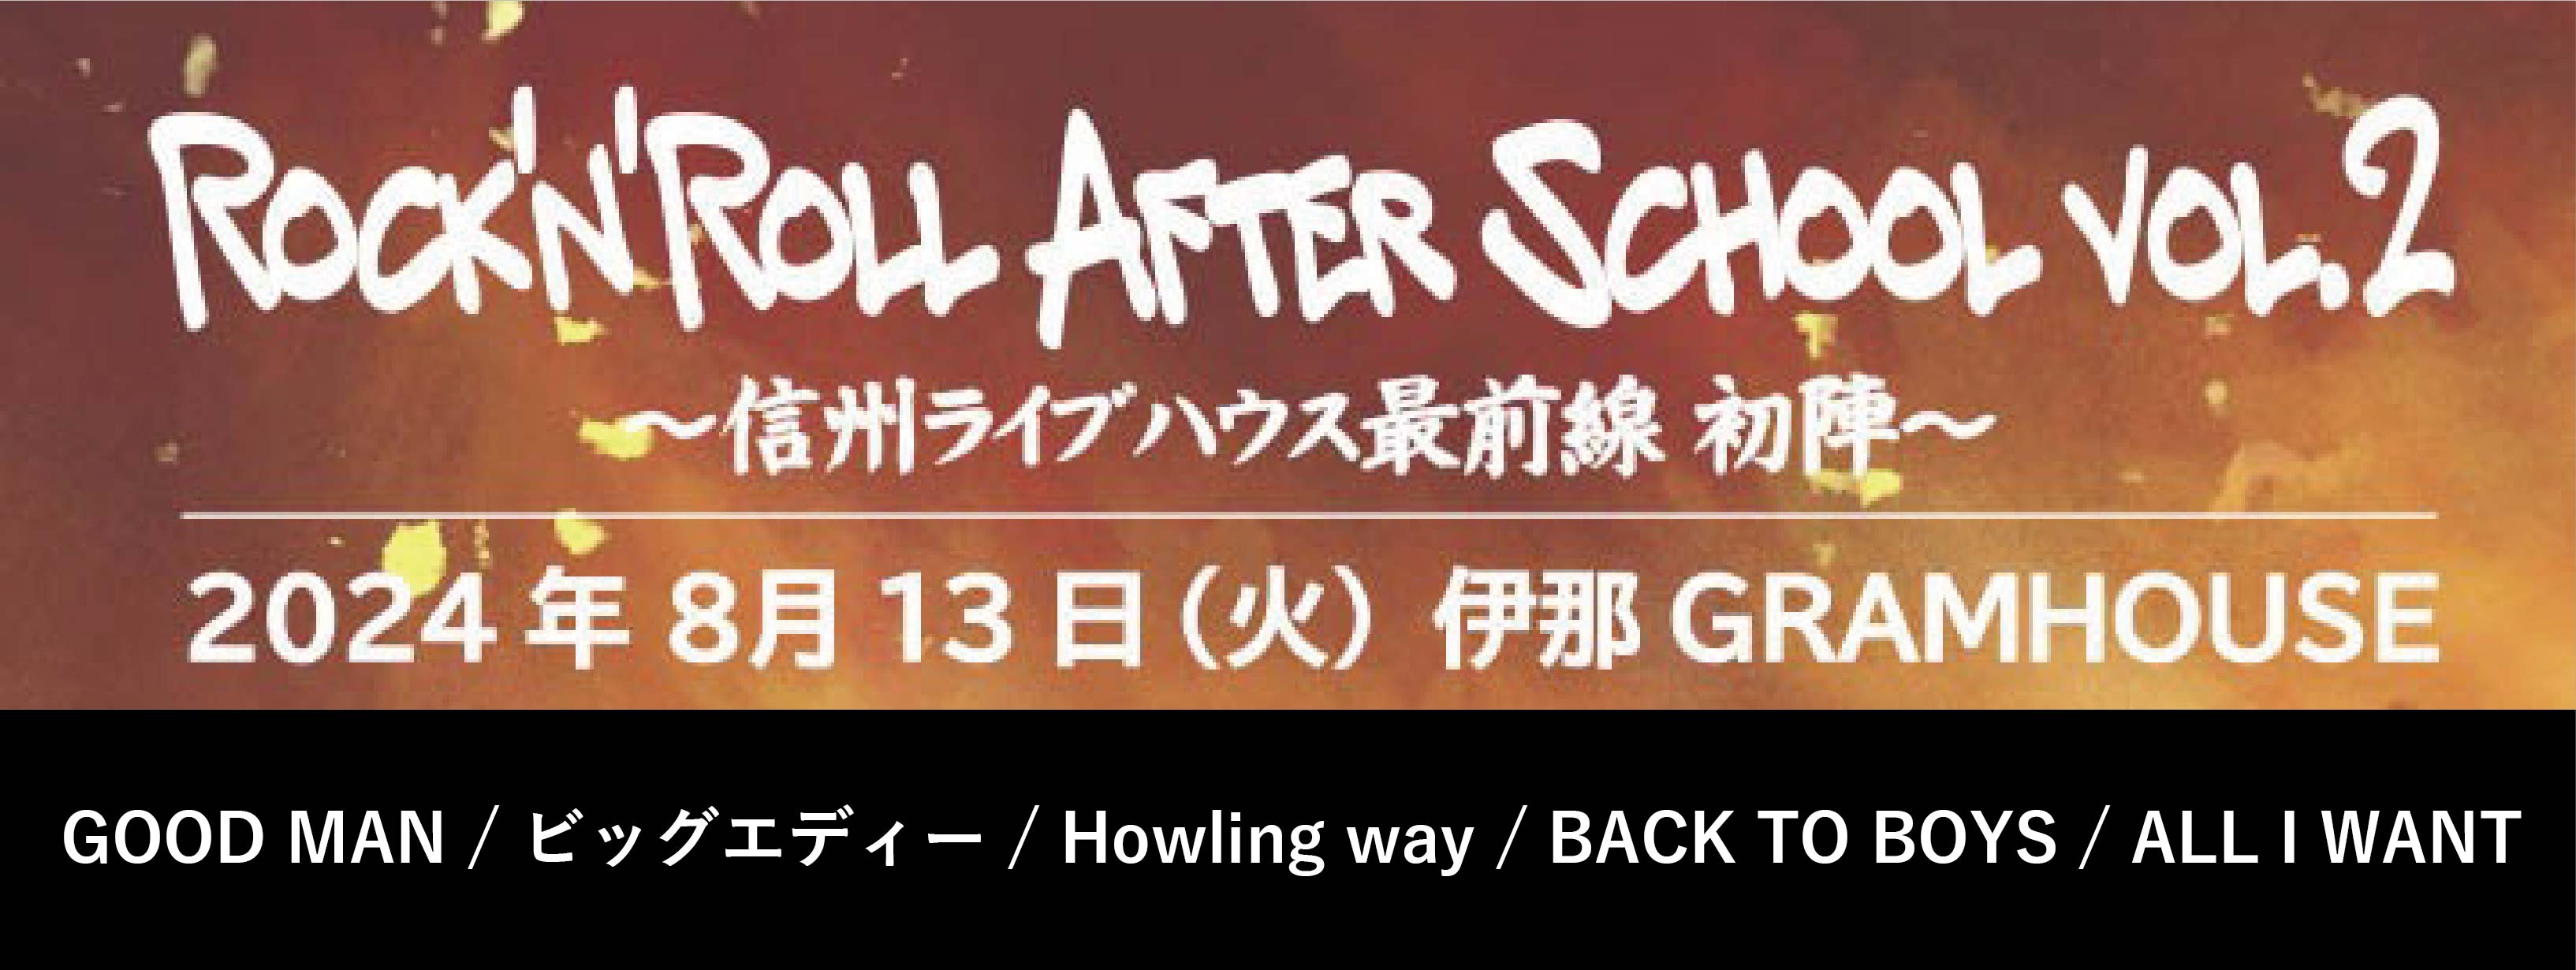 Rock’n Roll After School vol.2